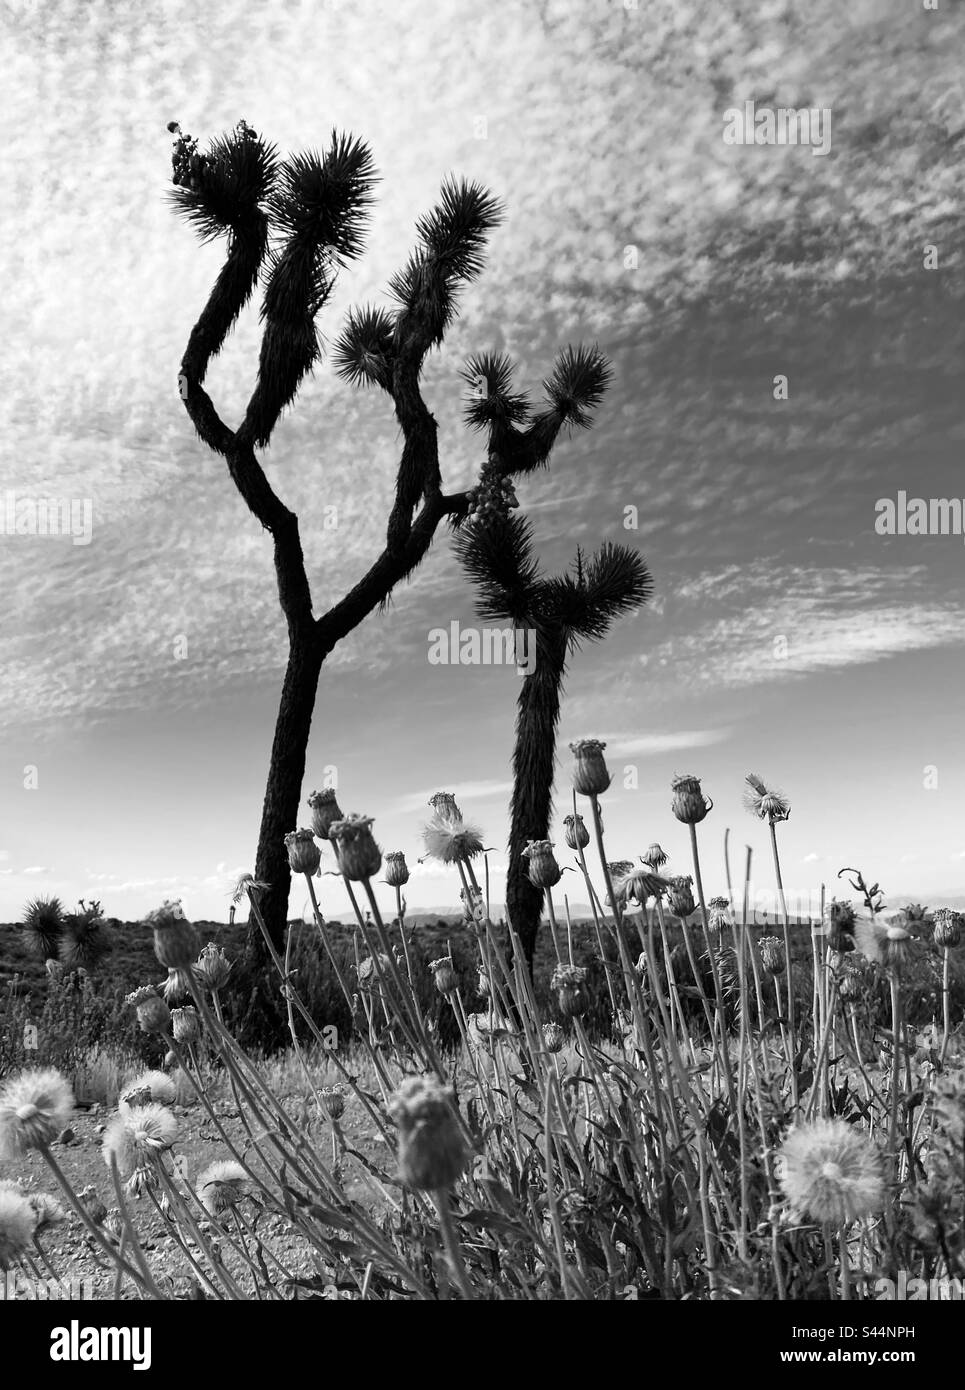 Joshua trees in black and white Stock Photo - Alamy